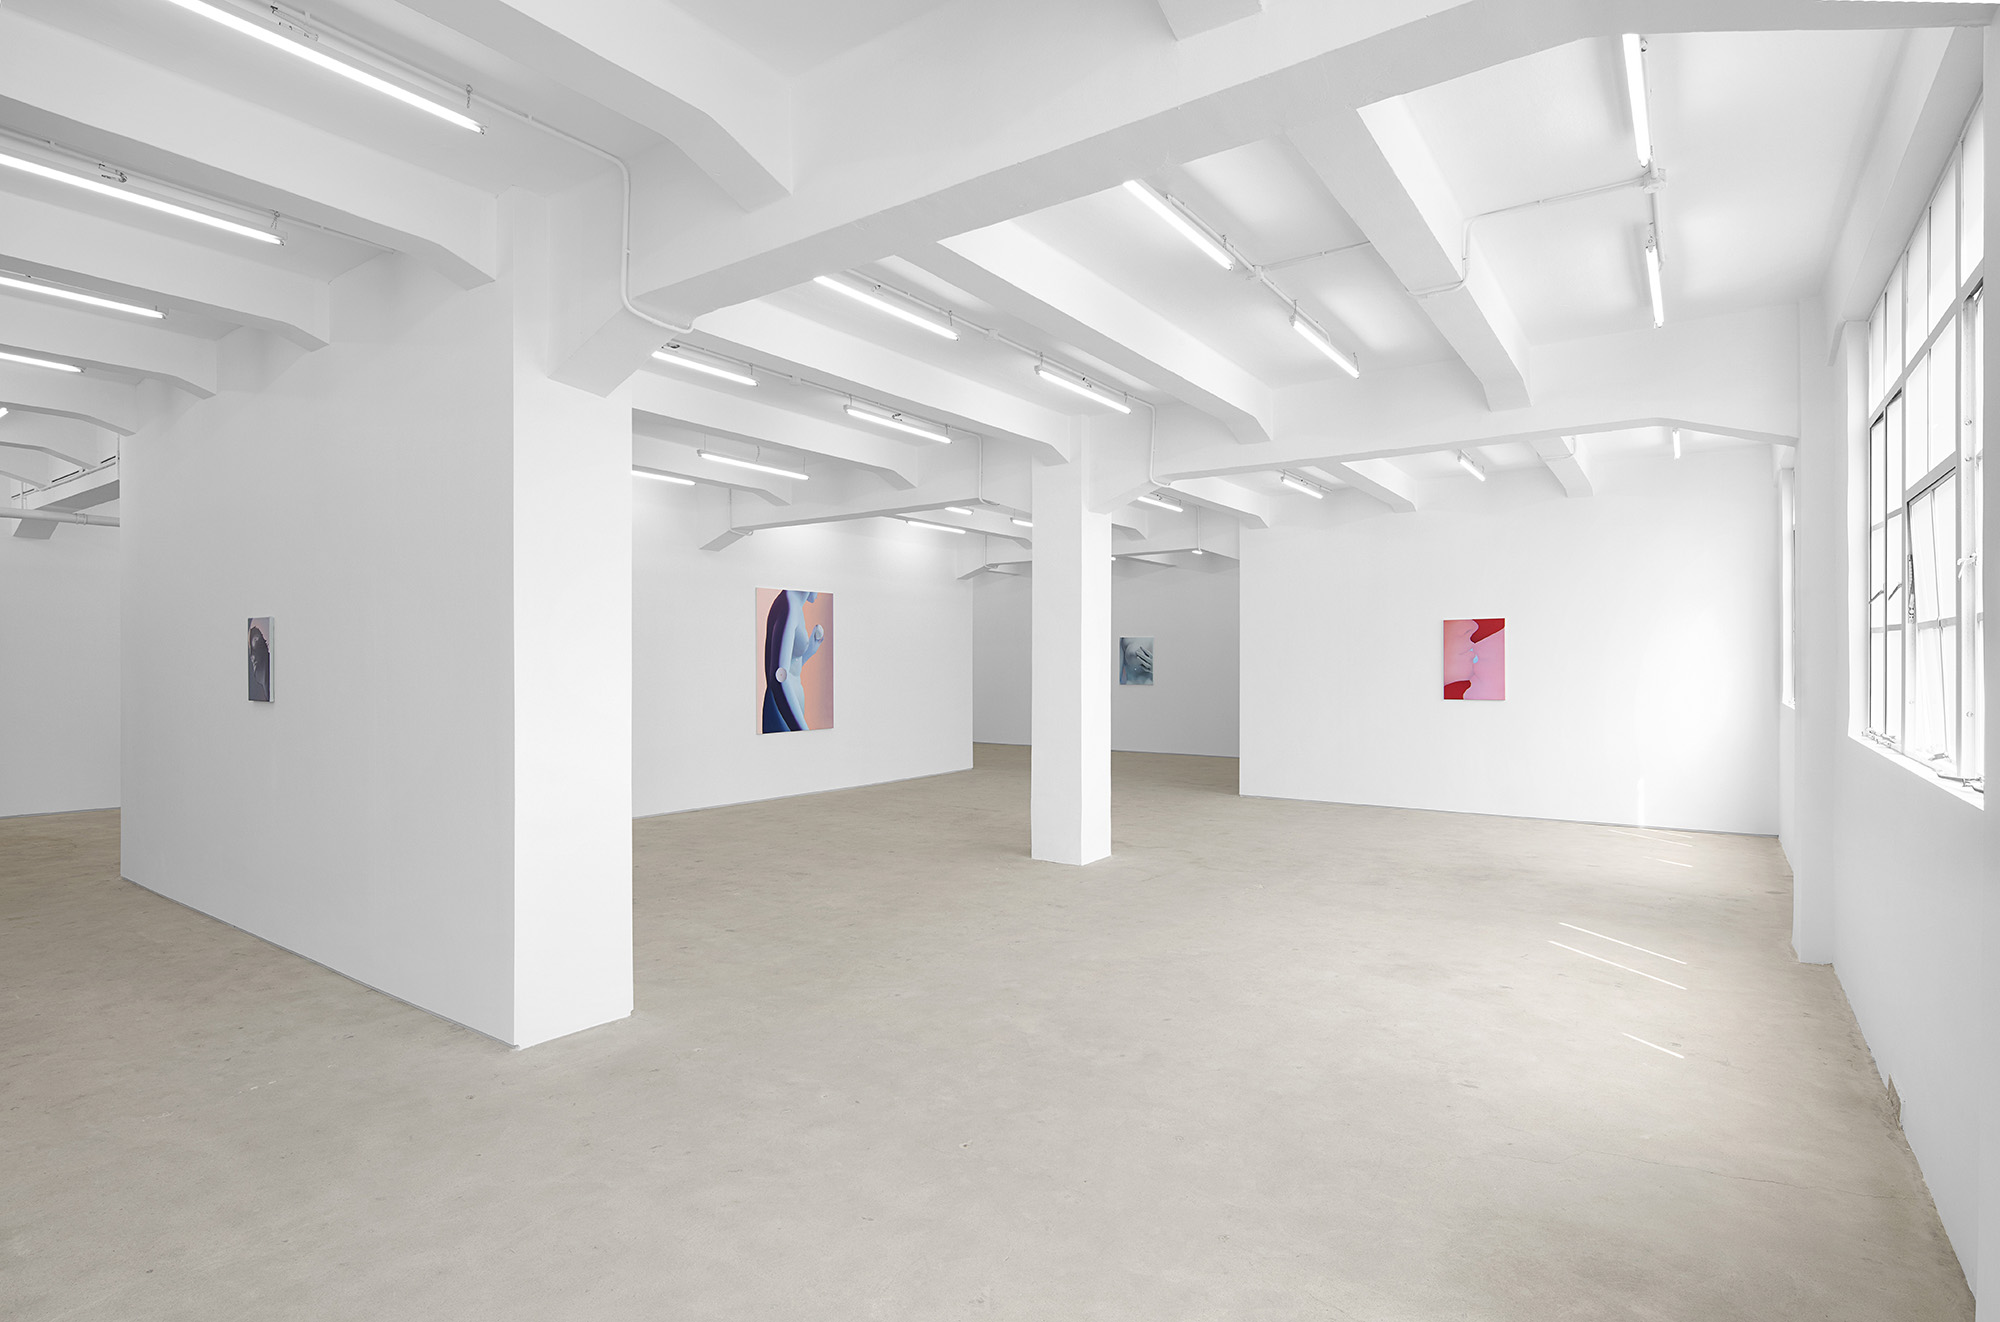 Vivian Greven, The Negatives, solo exhibition at Gallery Vacancy, installation view 5